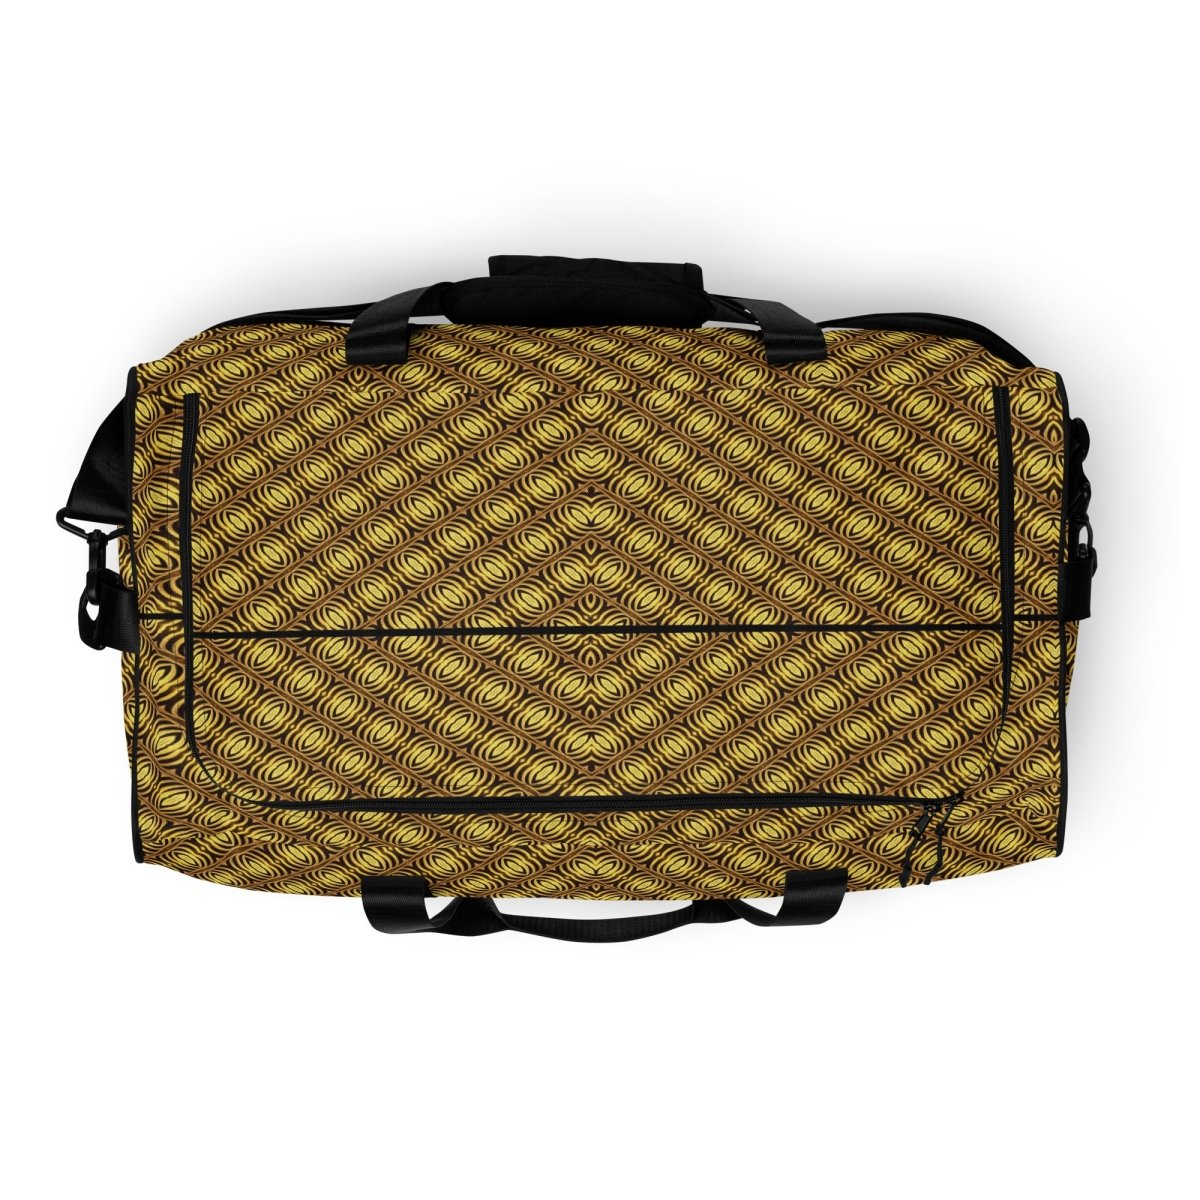 Sefira Summer Duffle Bag | Sefira Beach Collection Accessories - Sefira Collections